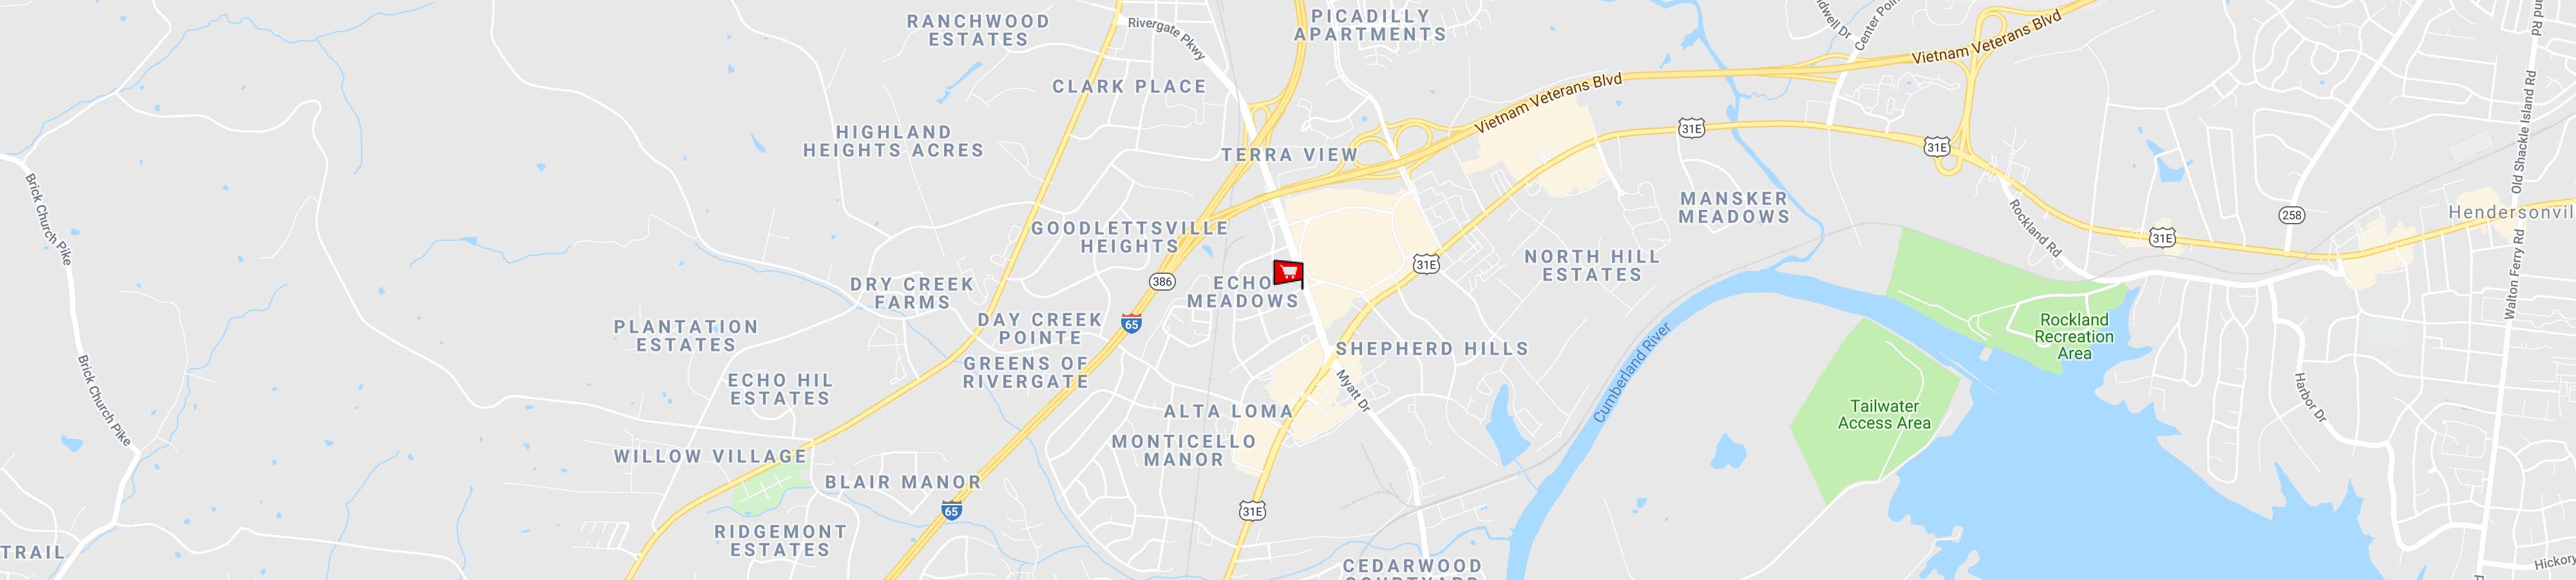 Goodlettsville Store Map